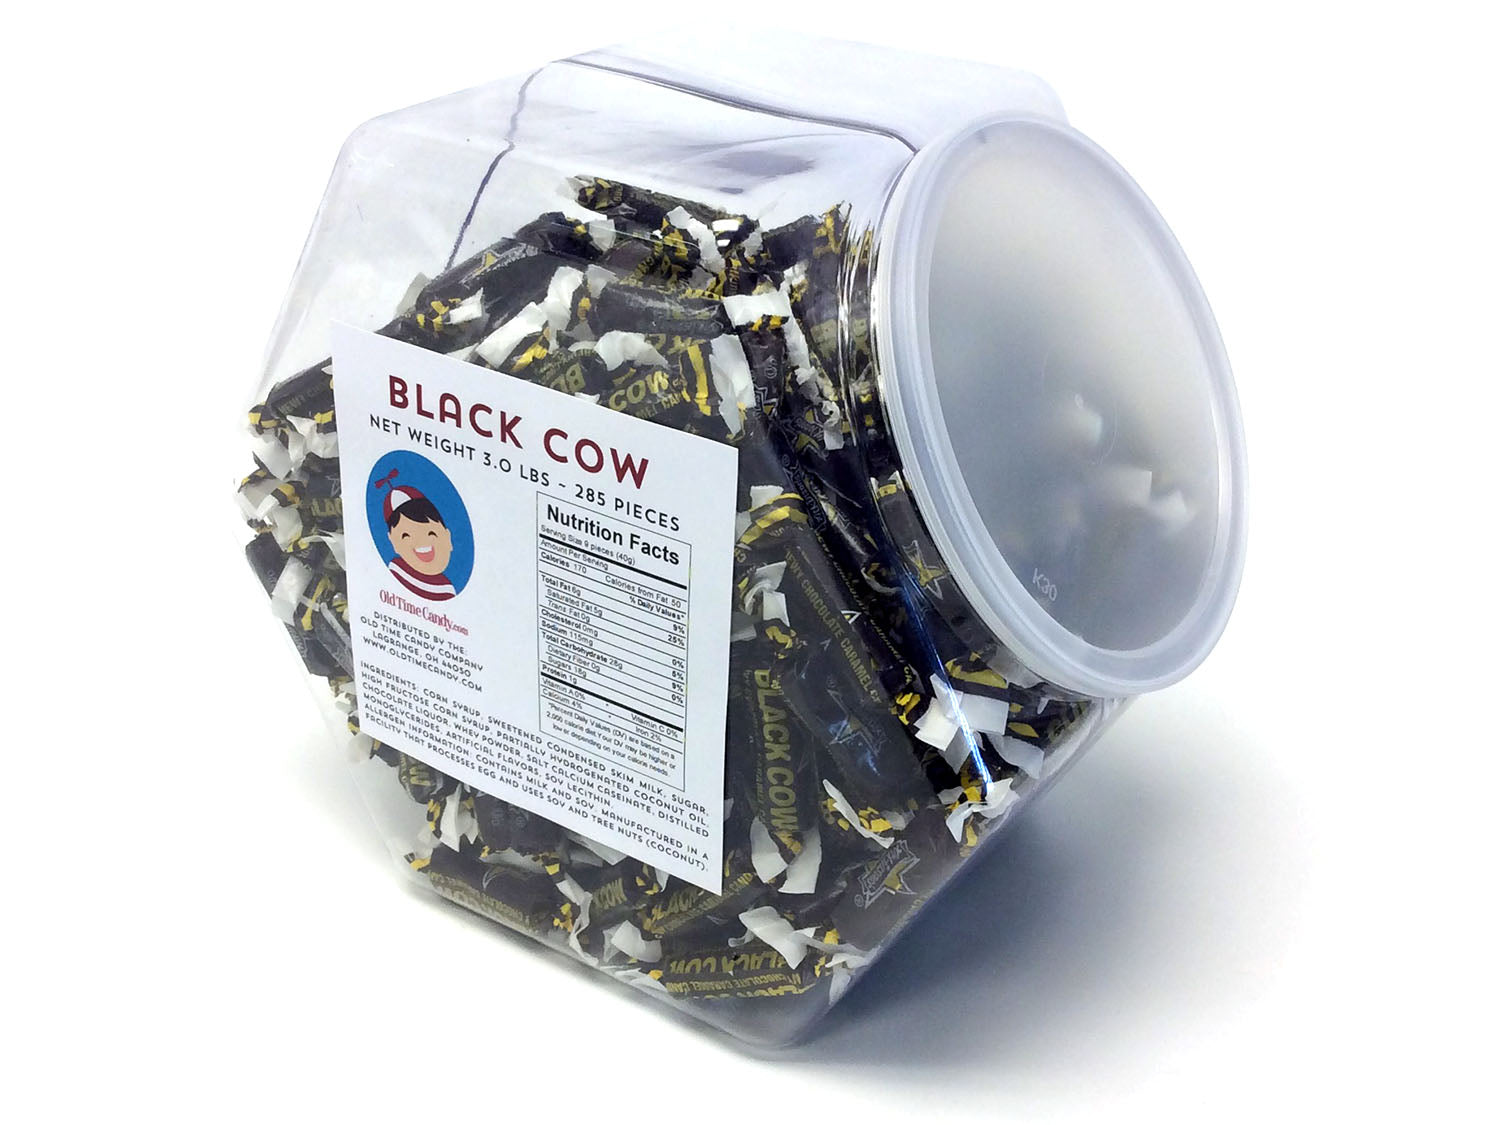 Black Cow bite size - 3 lb plastic tub